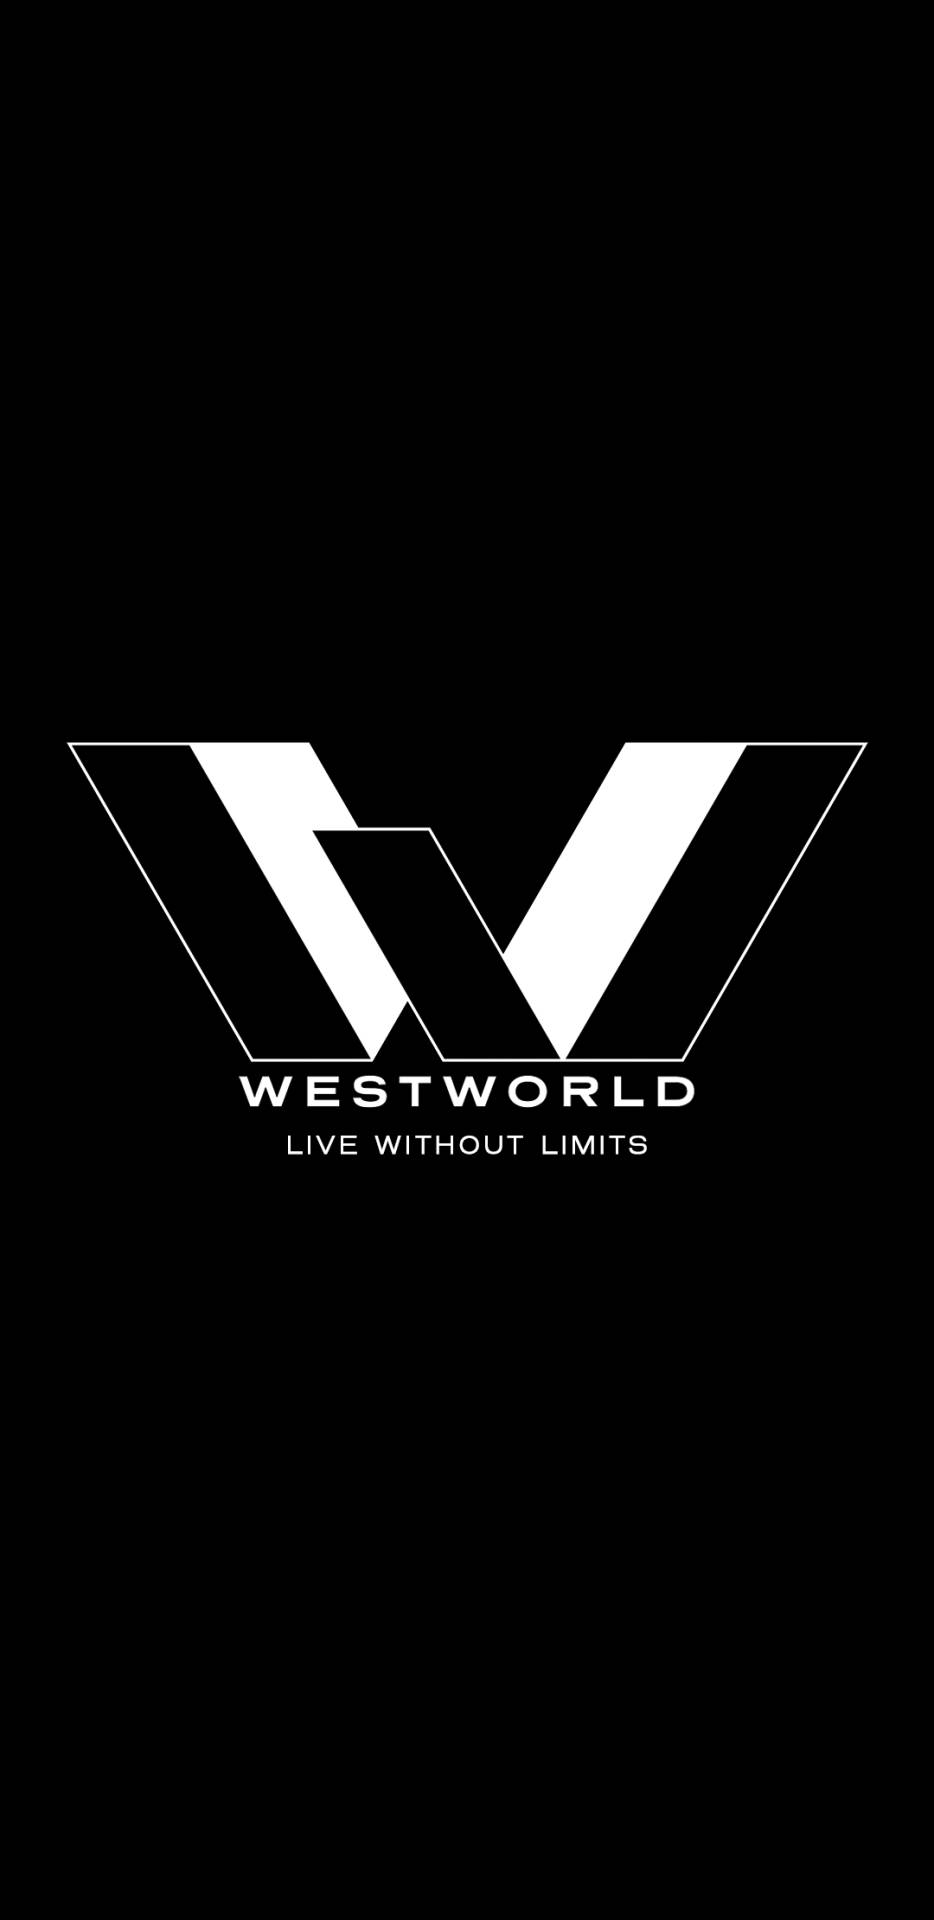 Westworld Live Without Limits Logo Wallpaper